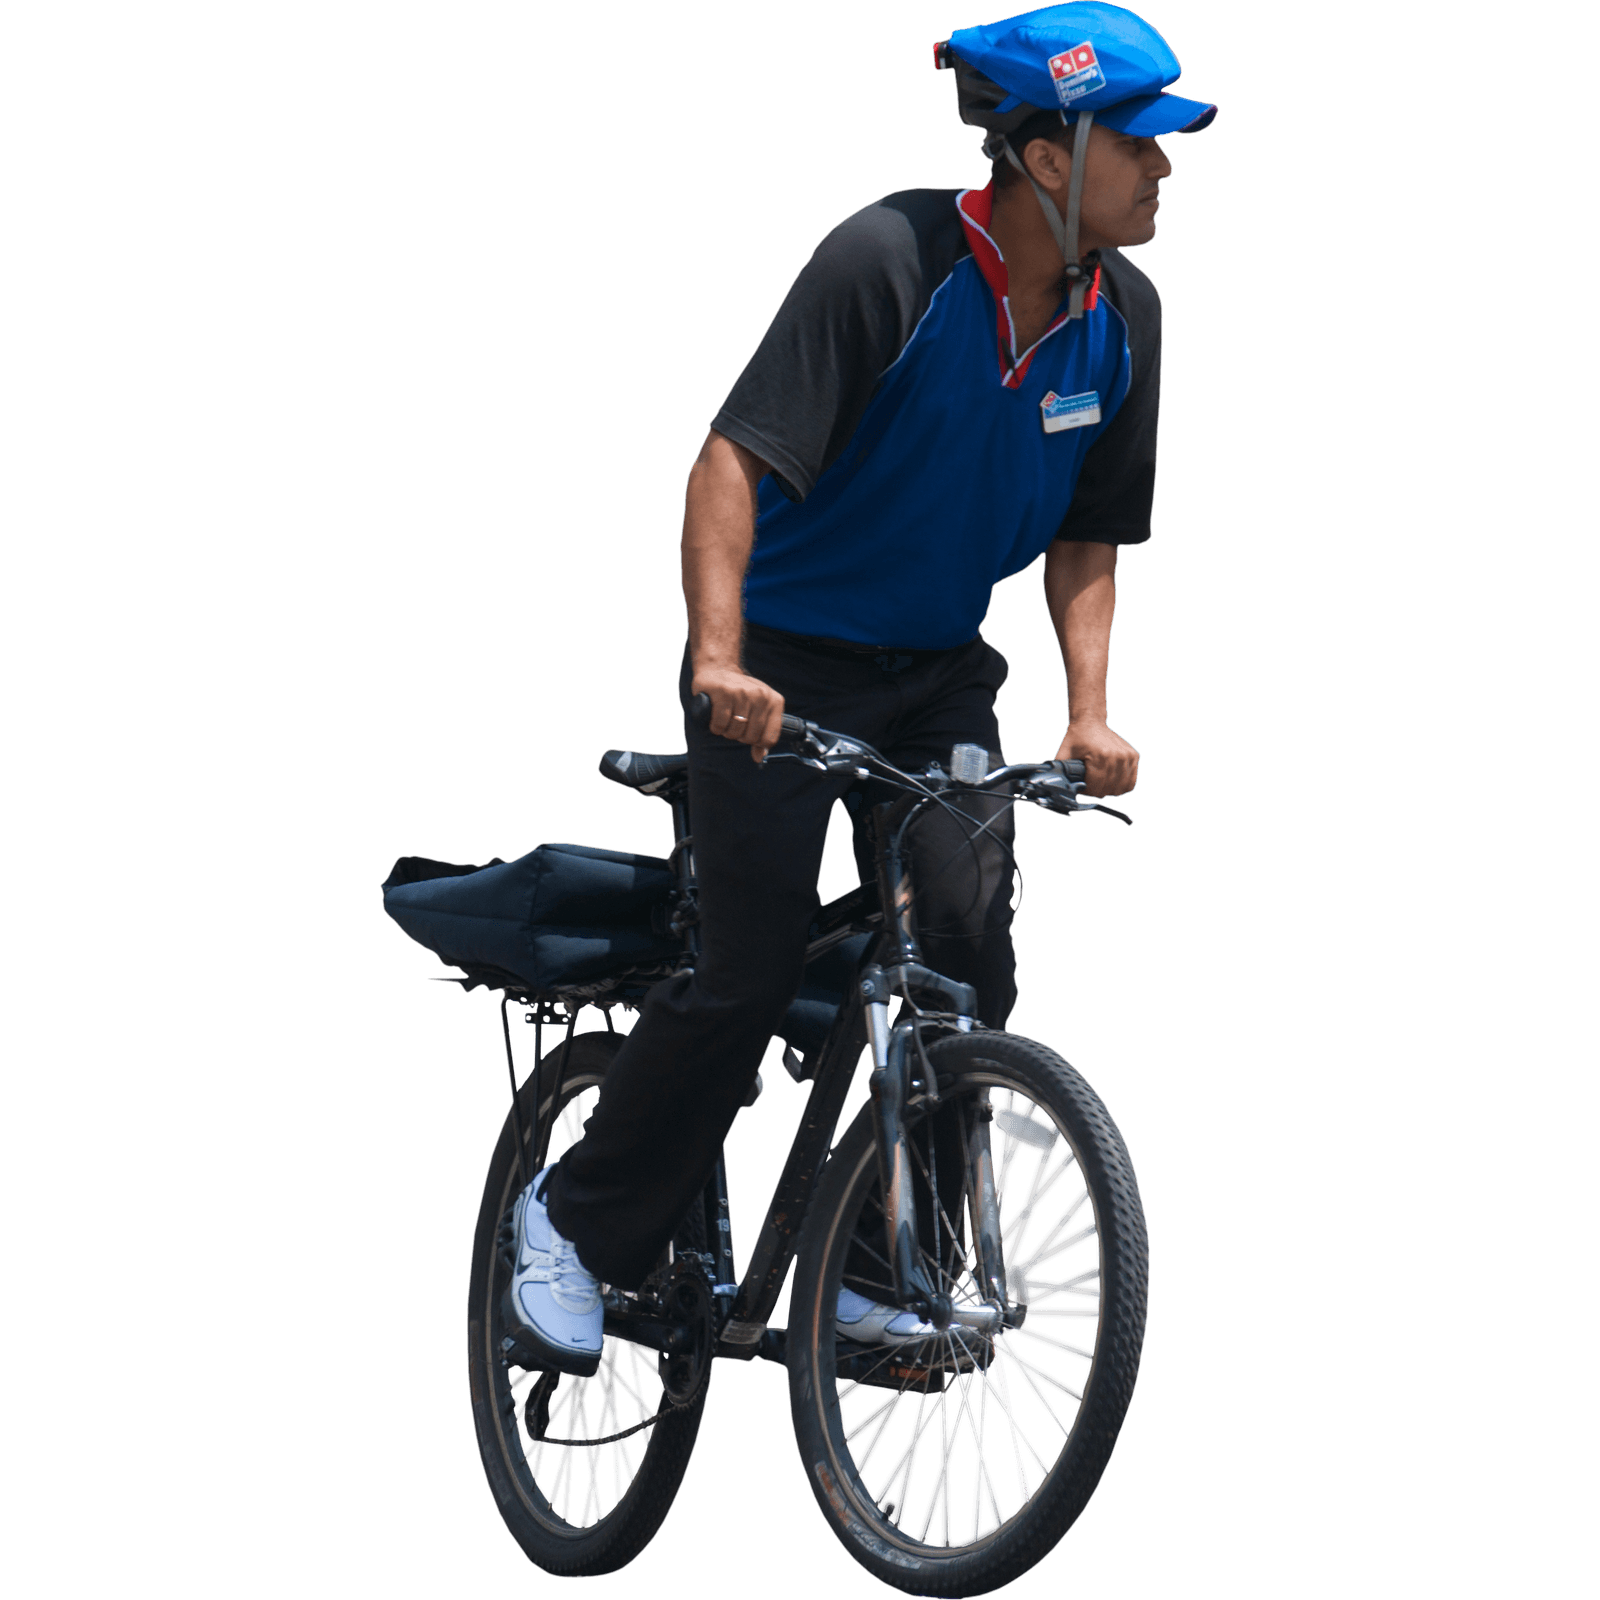 Man On Bicycle Png Image PNG Image